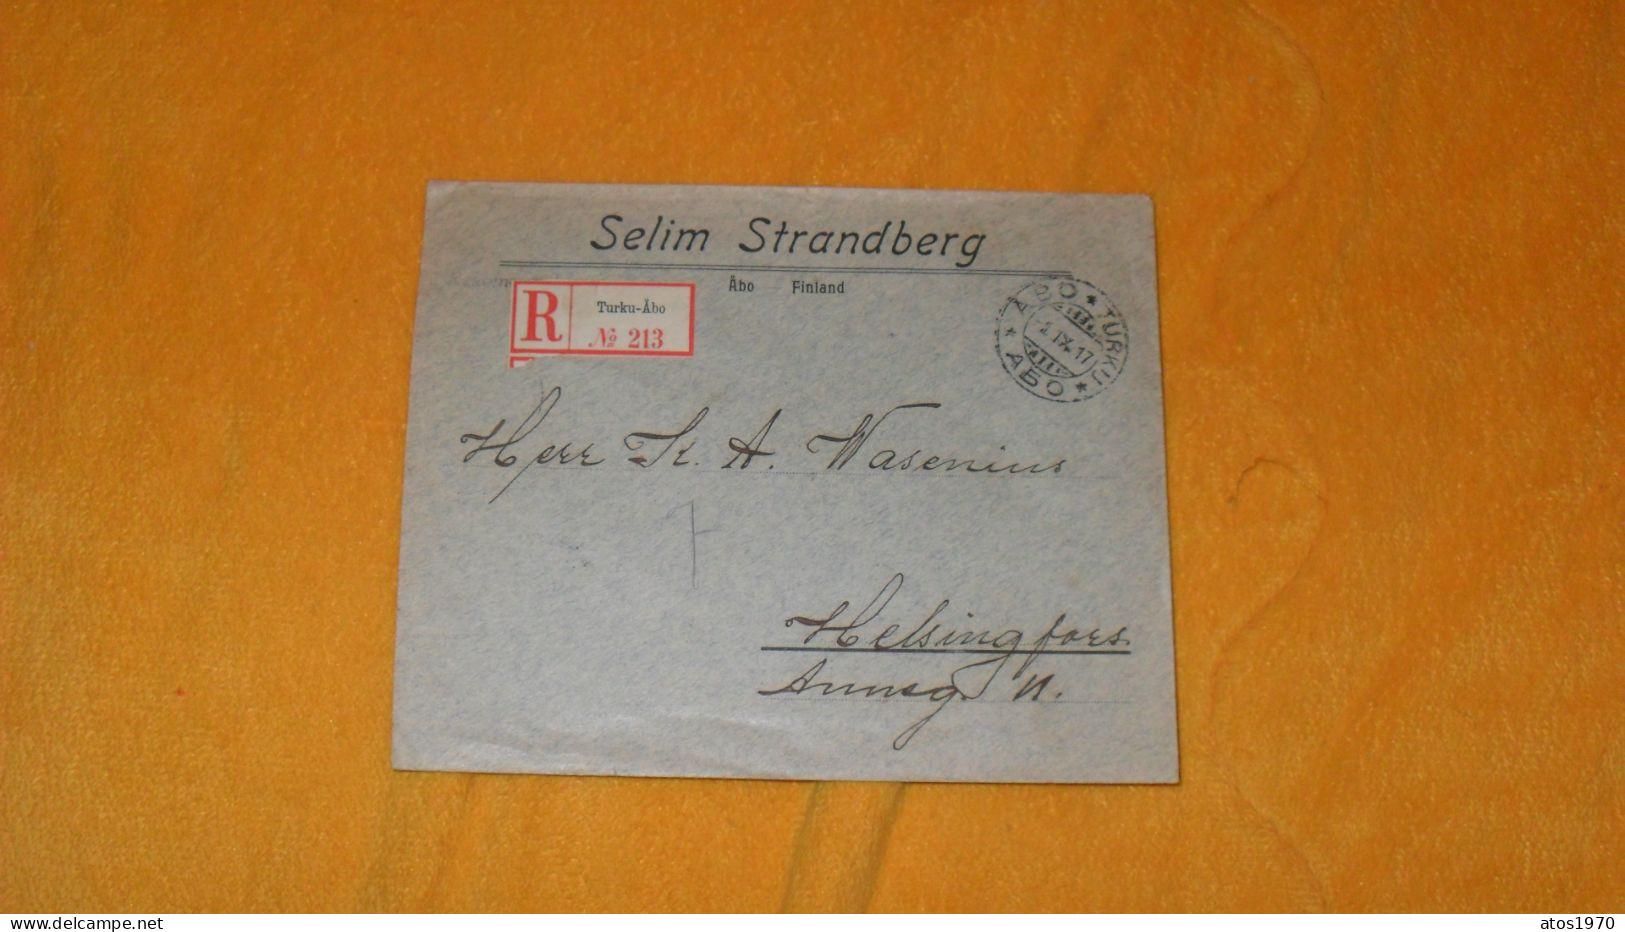 ENVELOPPE ANCIENNE DE 1917../ SELIM STRANDBERG ABO FINLAND..RECOMMANDE TURKU ABO N°213 POUR HELSINKI ?..+ TIMBRES X 25 - Covers & Documents